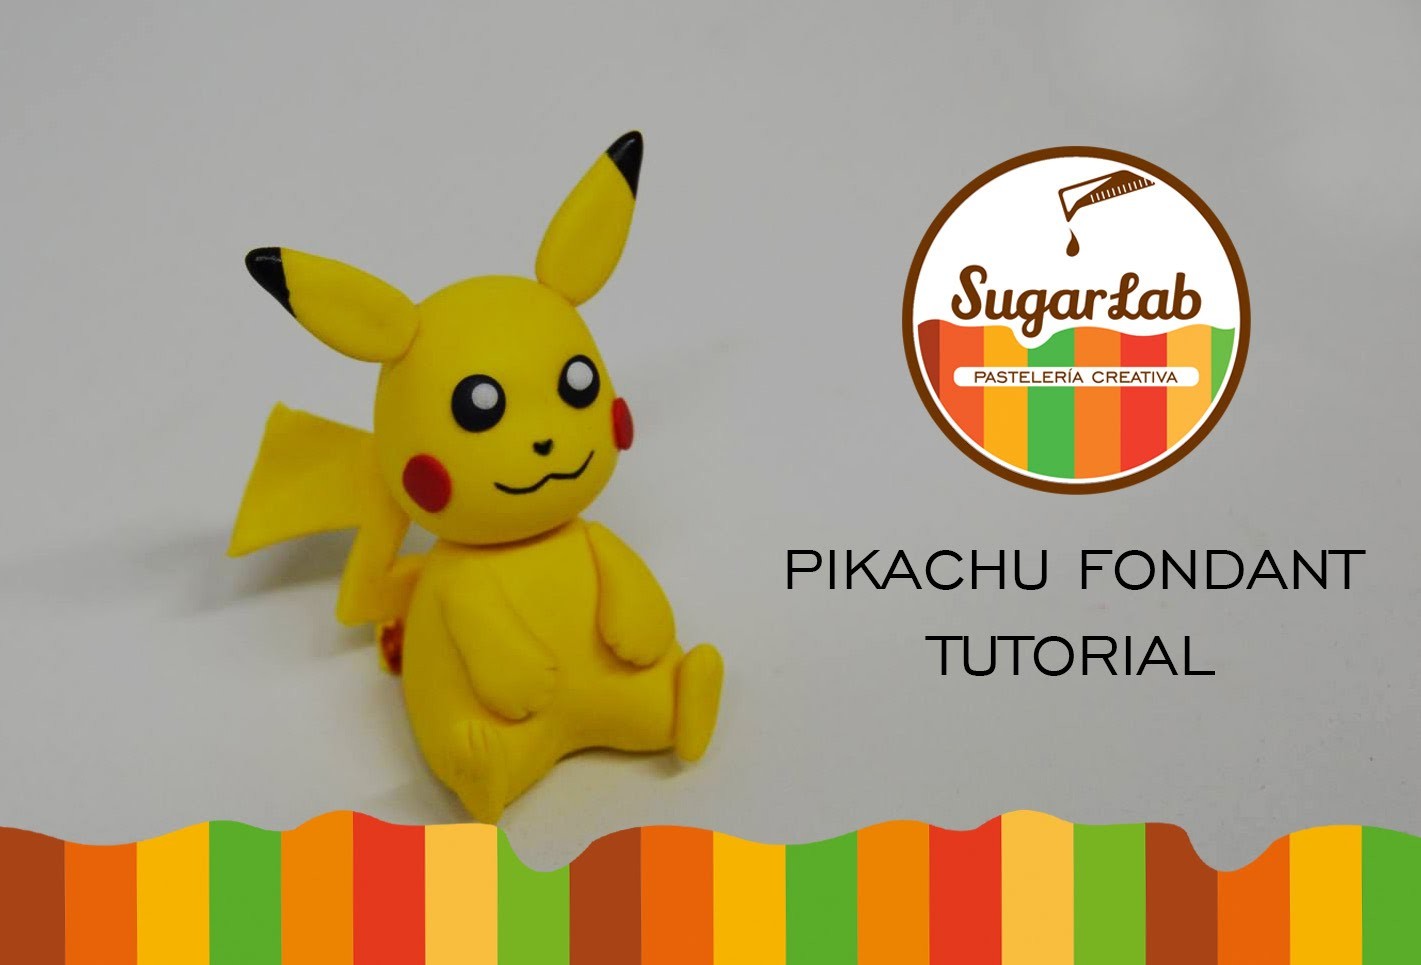 Pikachu Fondant Tutorial - Como hacer a Pikachu en fondant